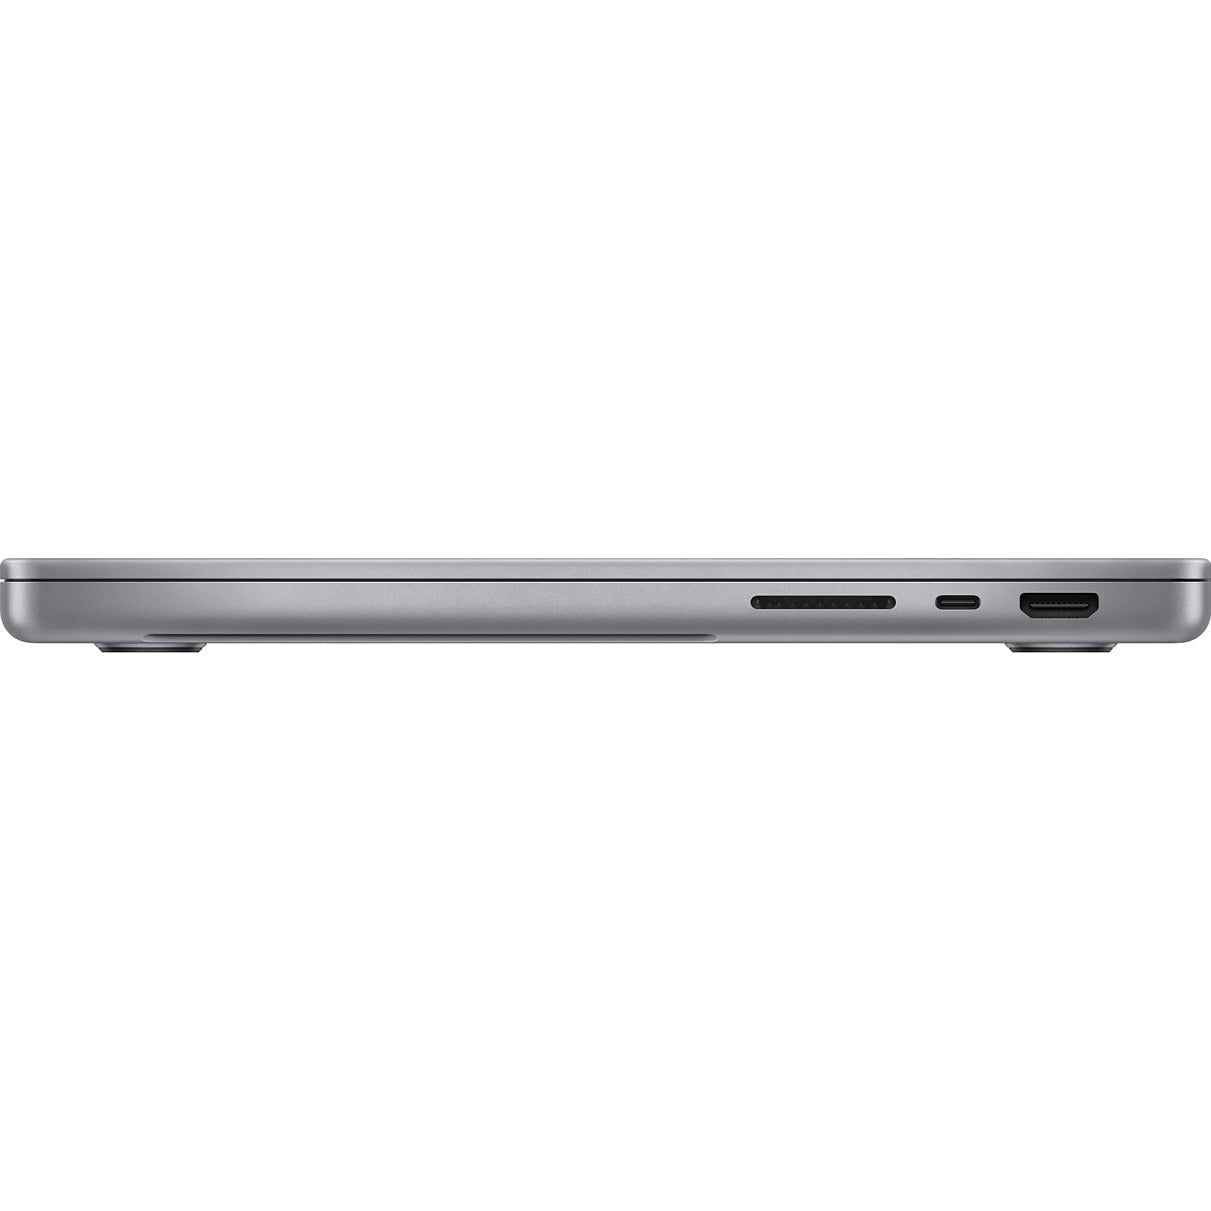 Apple Macbook Pro 14" 2021 Refurbished M1 Pro 8-Core - refurbished